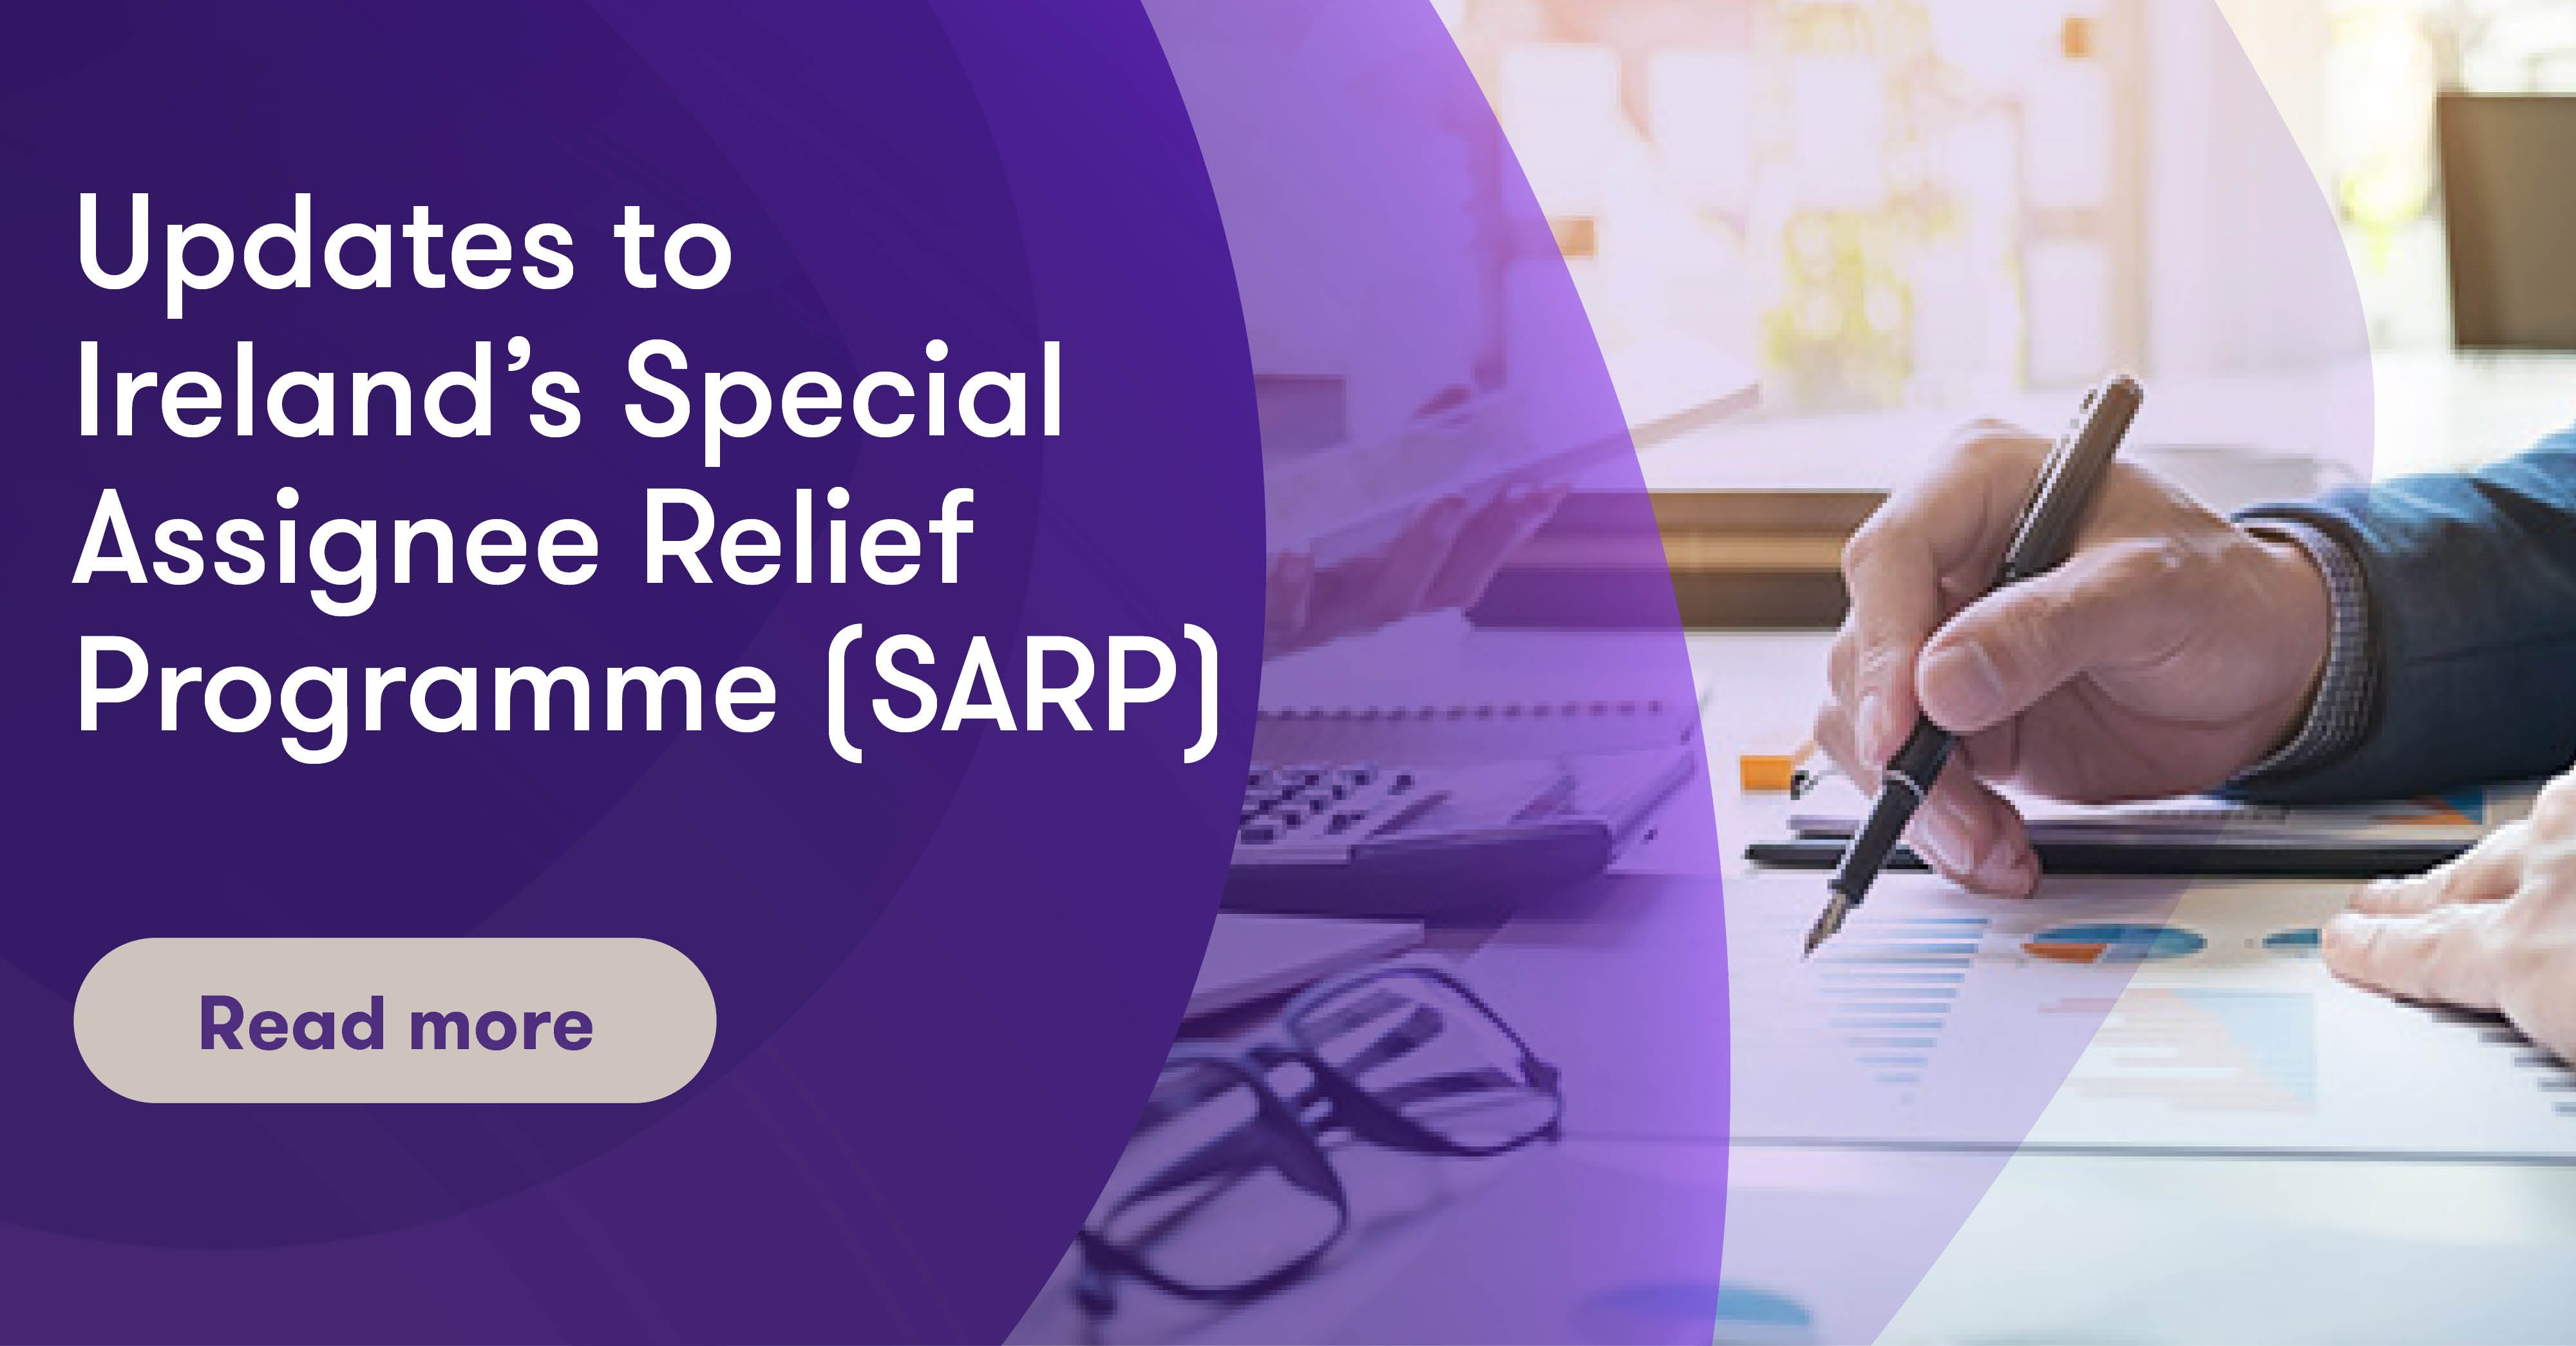 Updates to Ireland’s Special Assignee Relief Programme (SARP) Grant